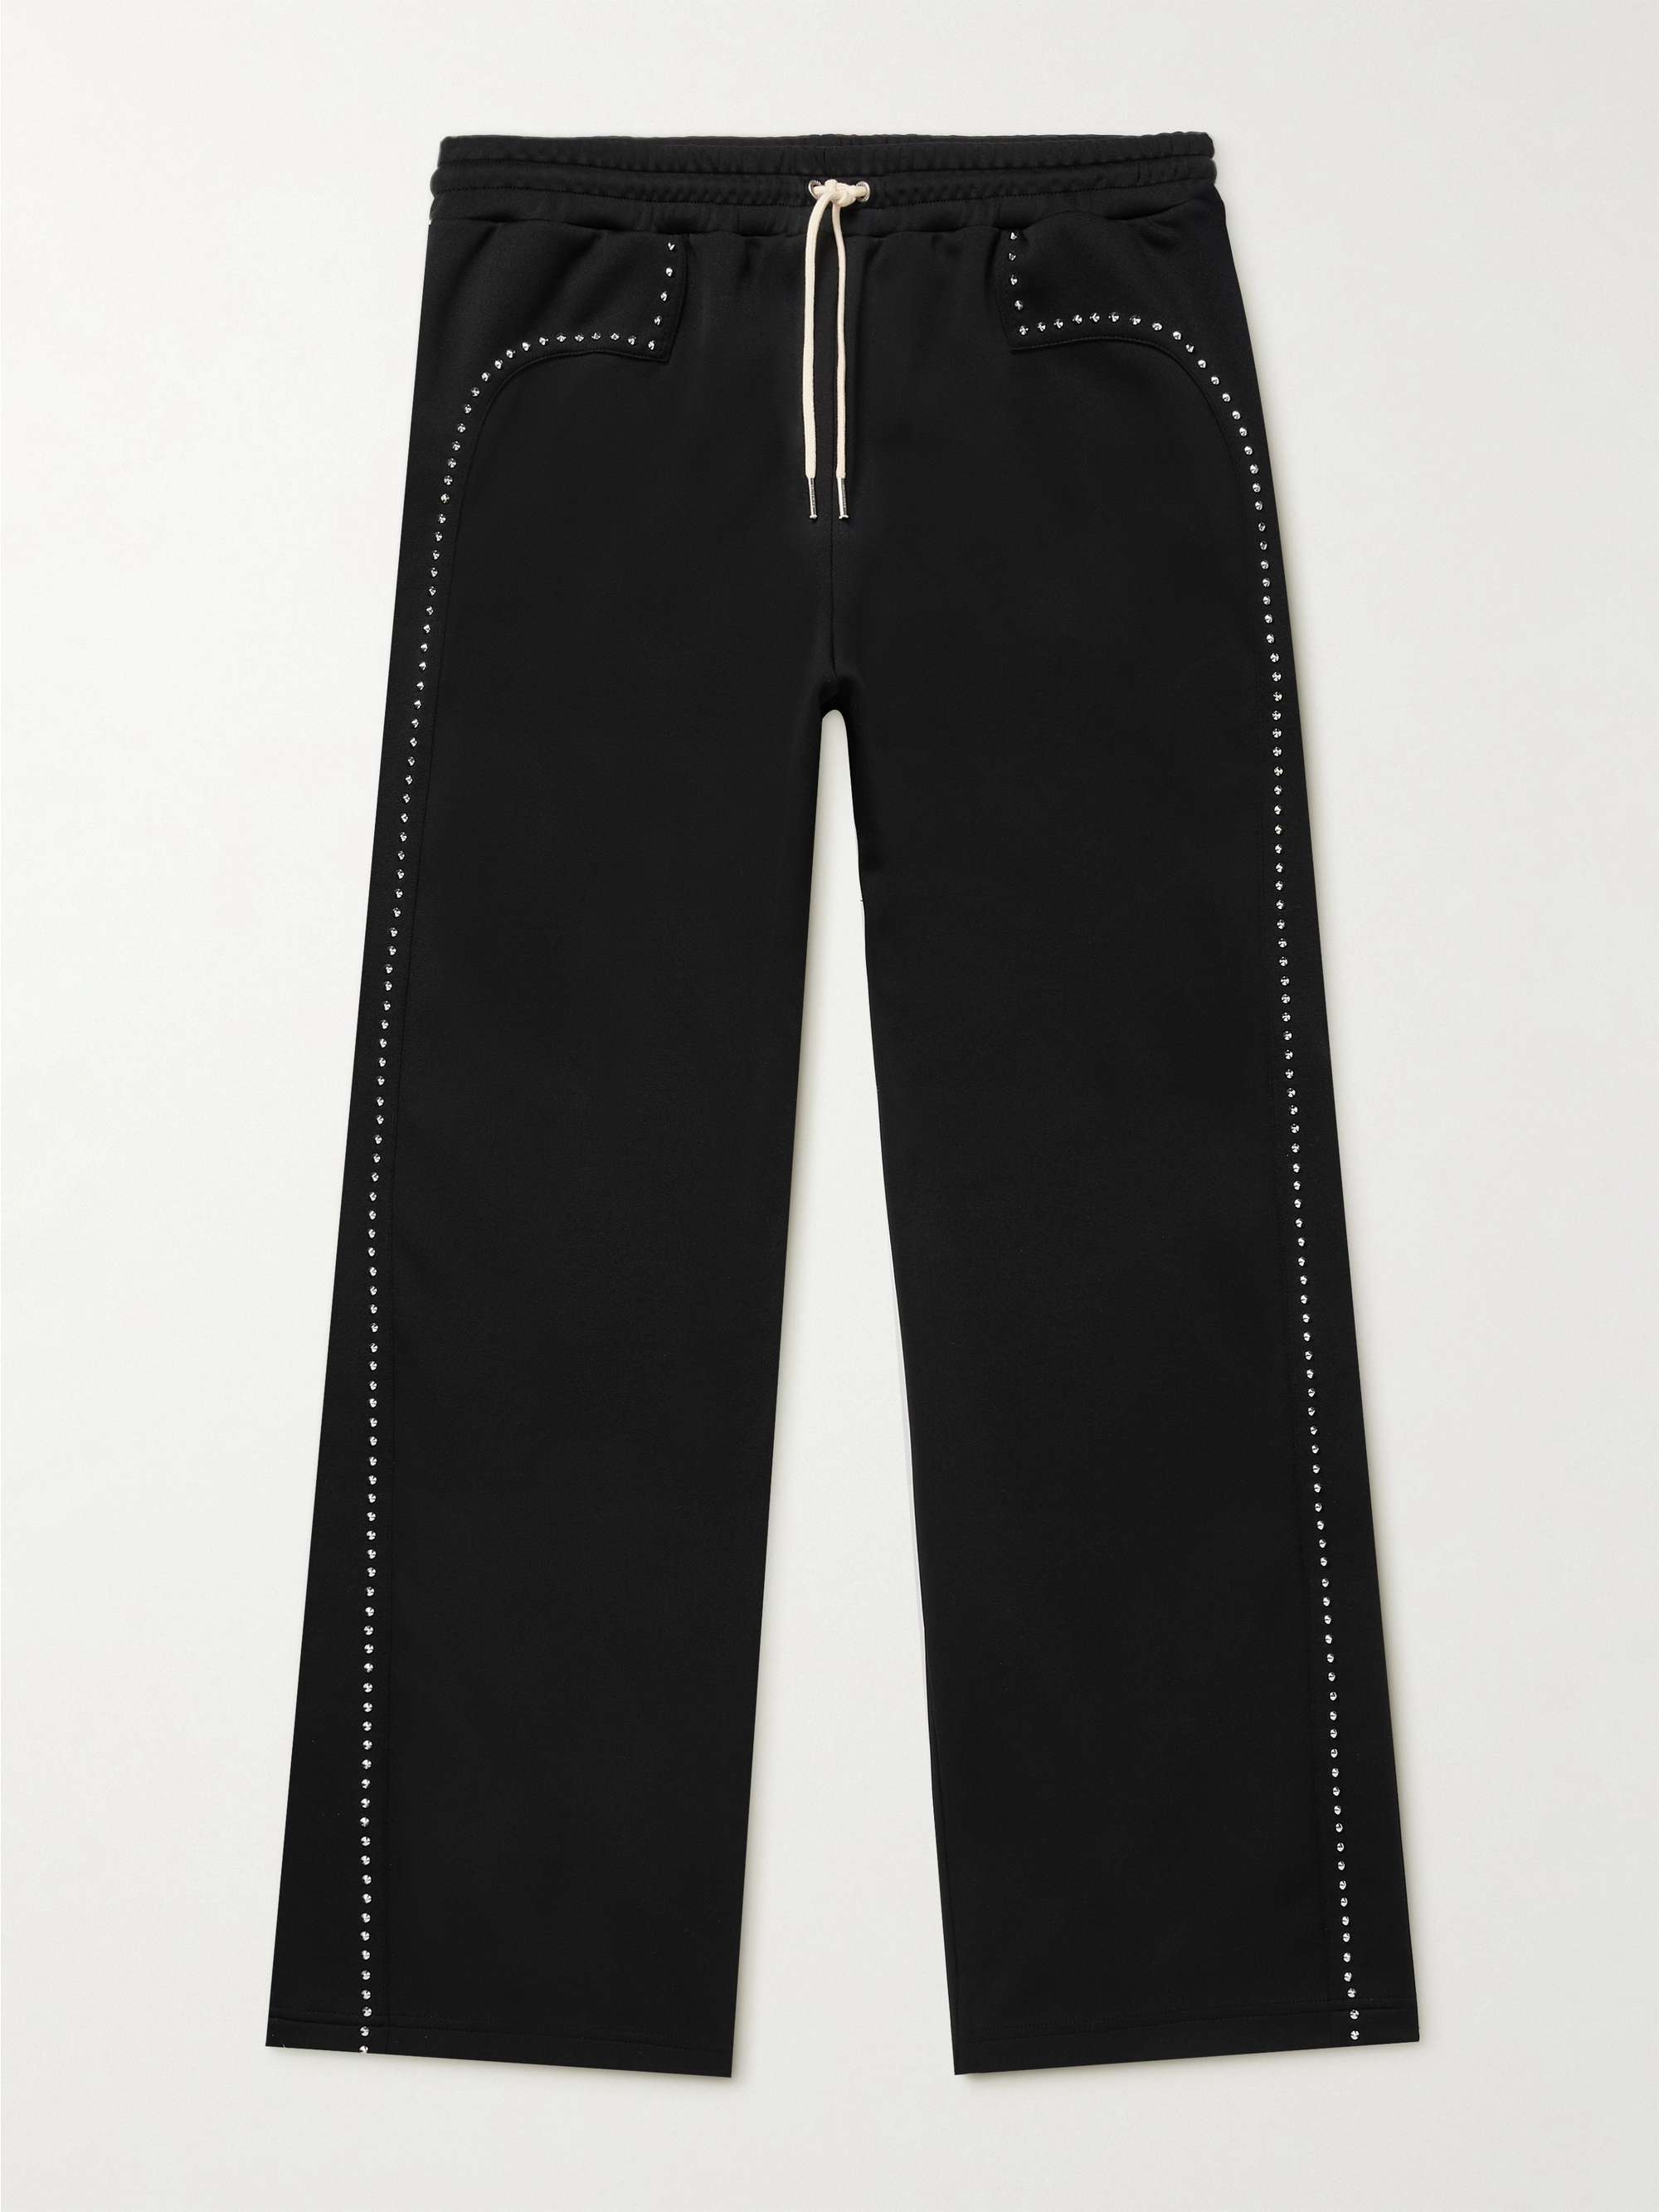 CELINE HOMME Straight-Leg Studded Jersey Sweatpants | MR PORTER